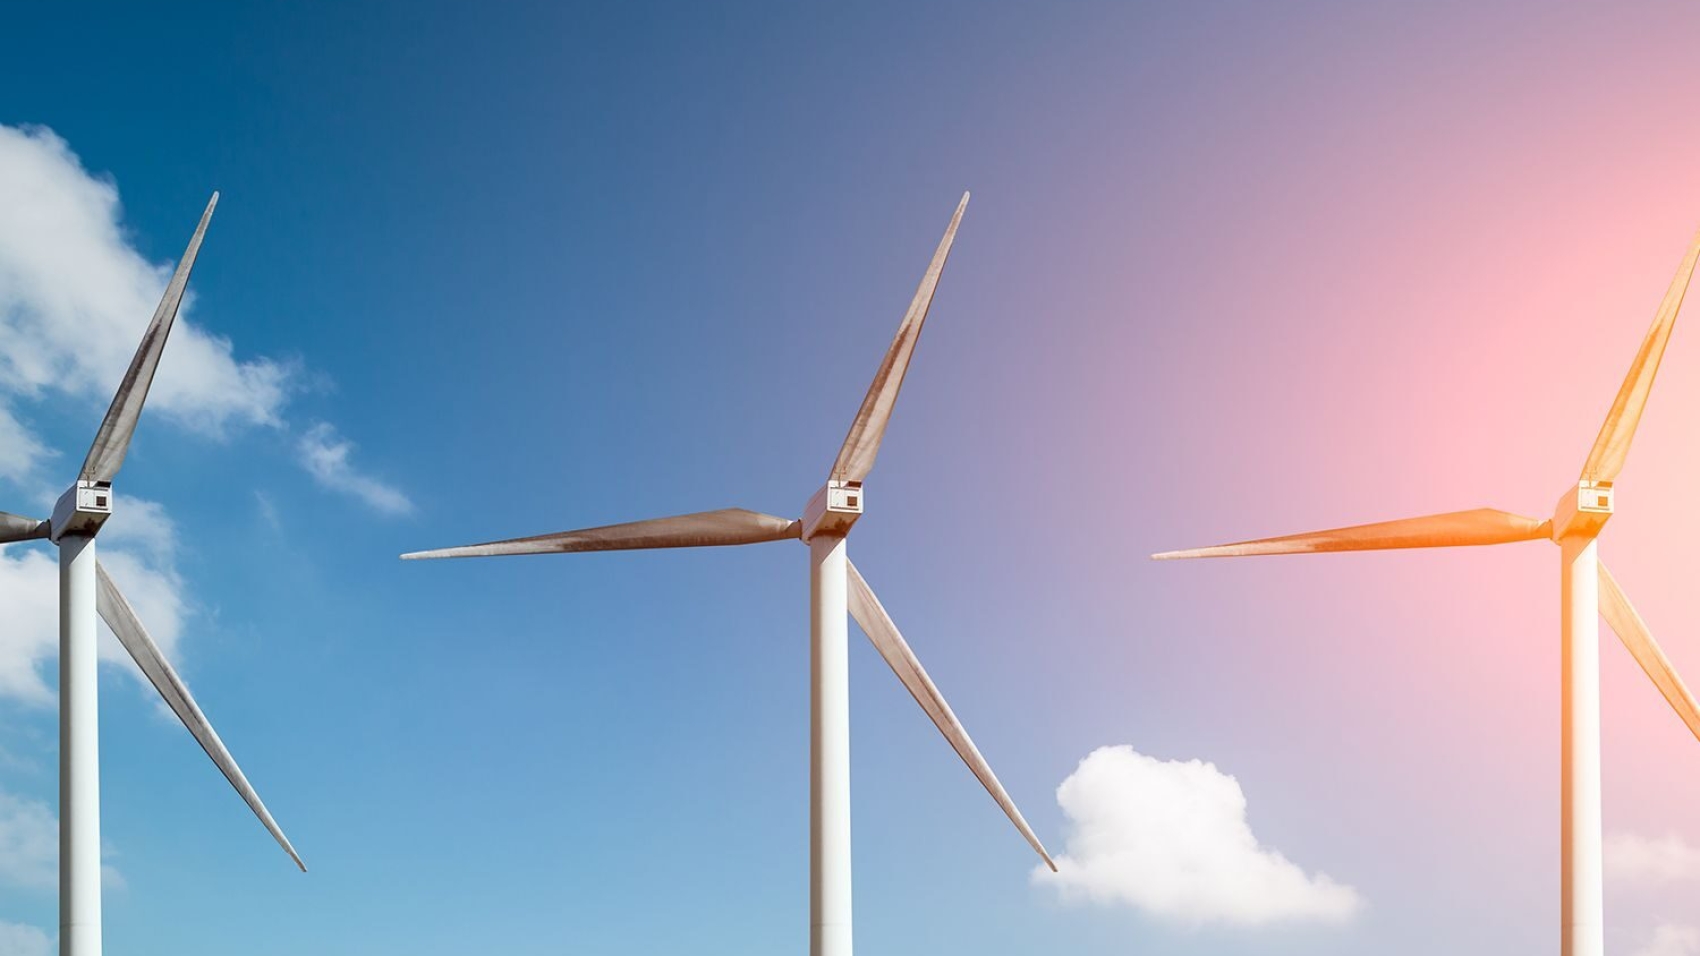 solar panels and wind turbine,green energy